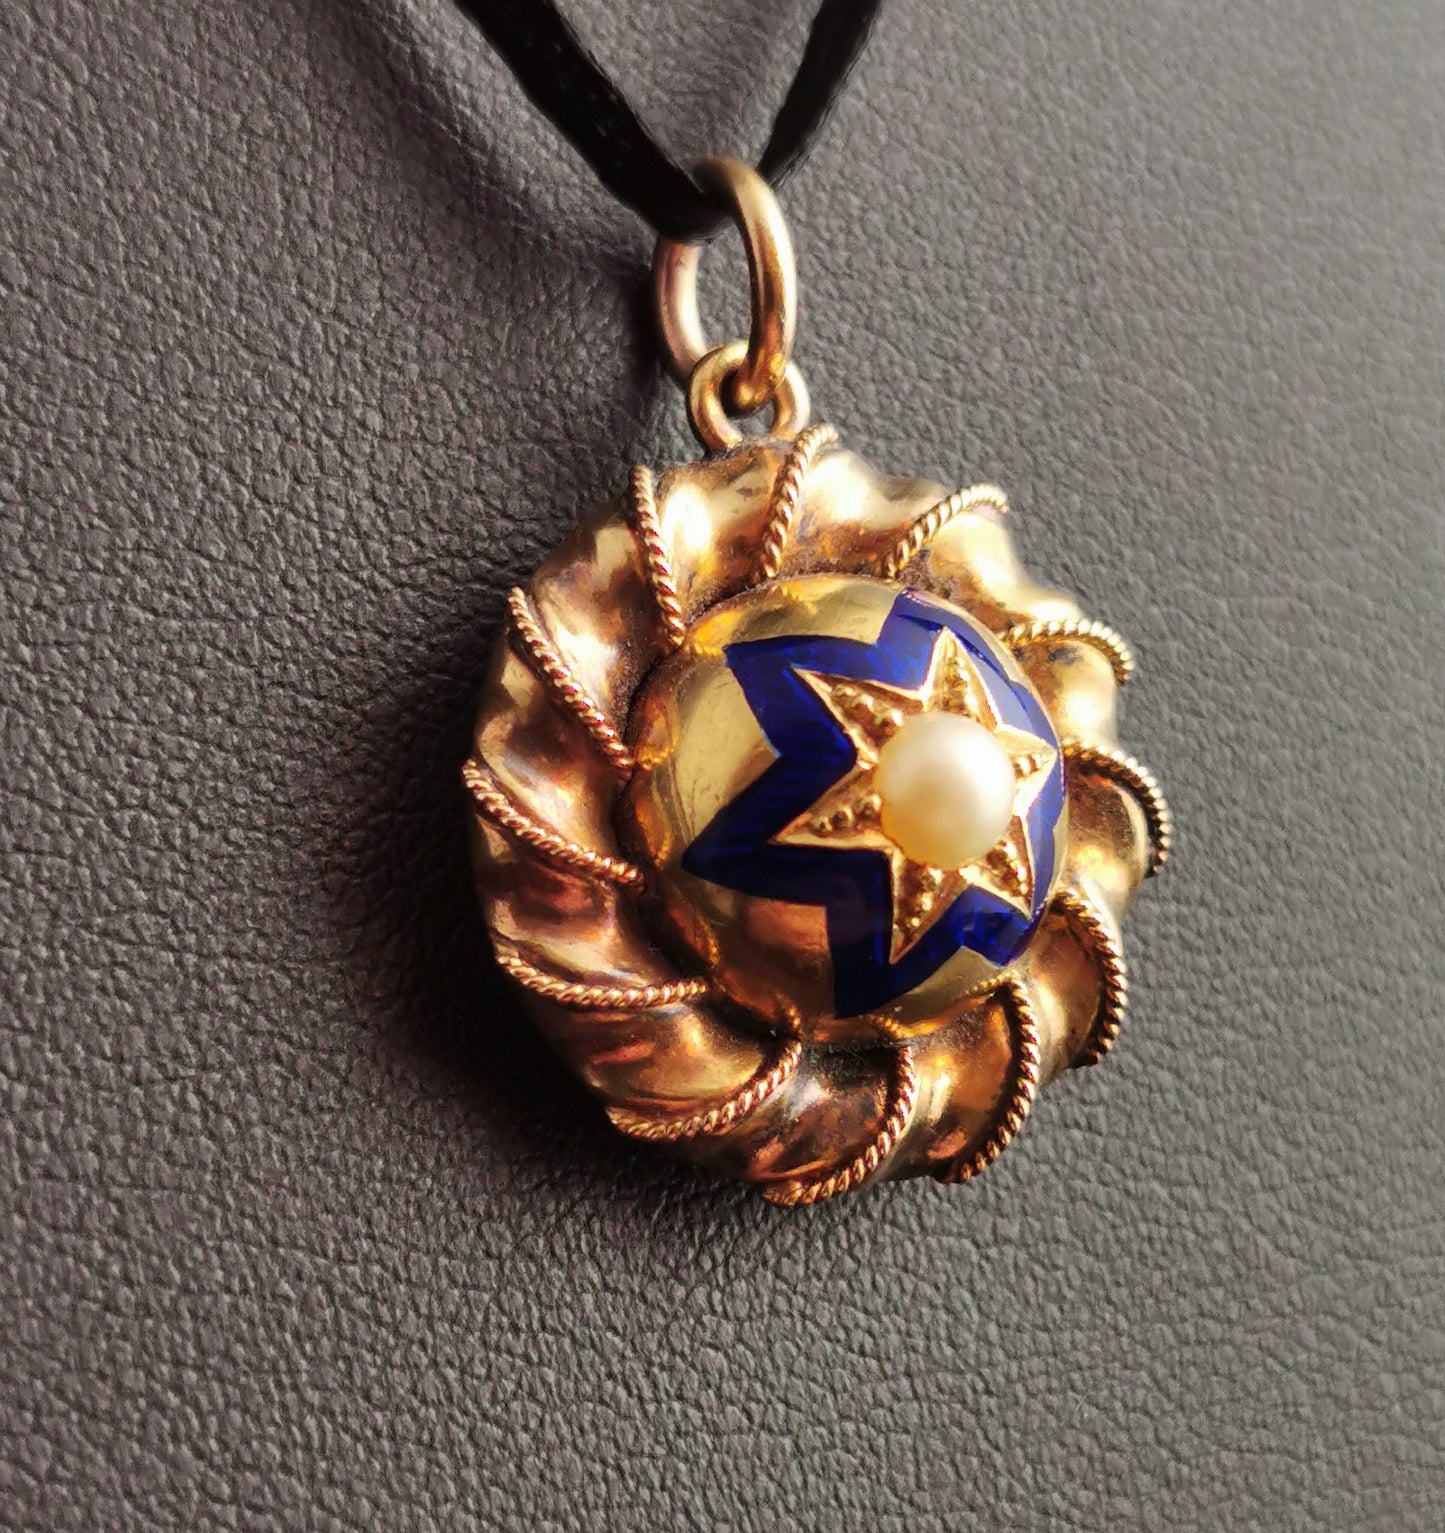 Victorian gold, blue enamel and split pearl star locket, pendant